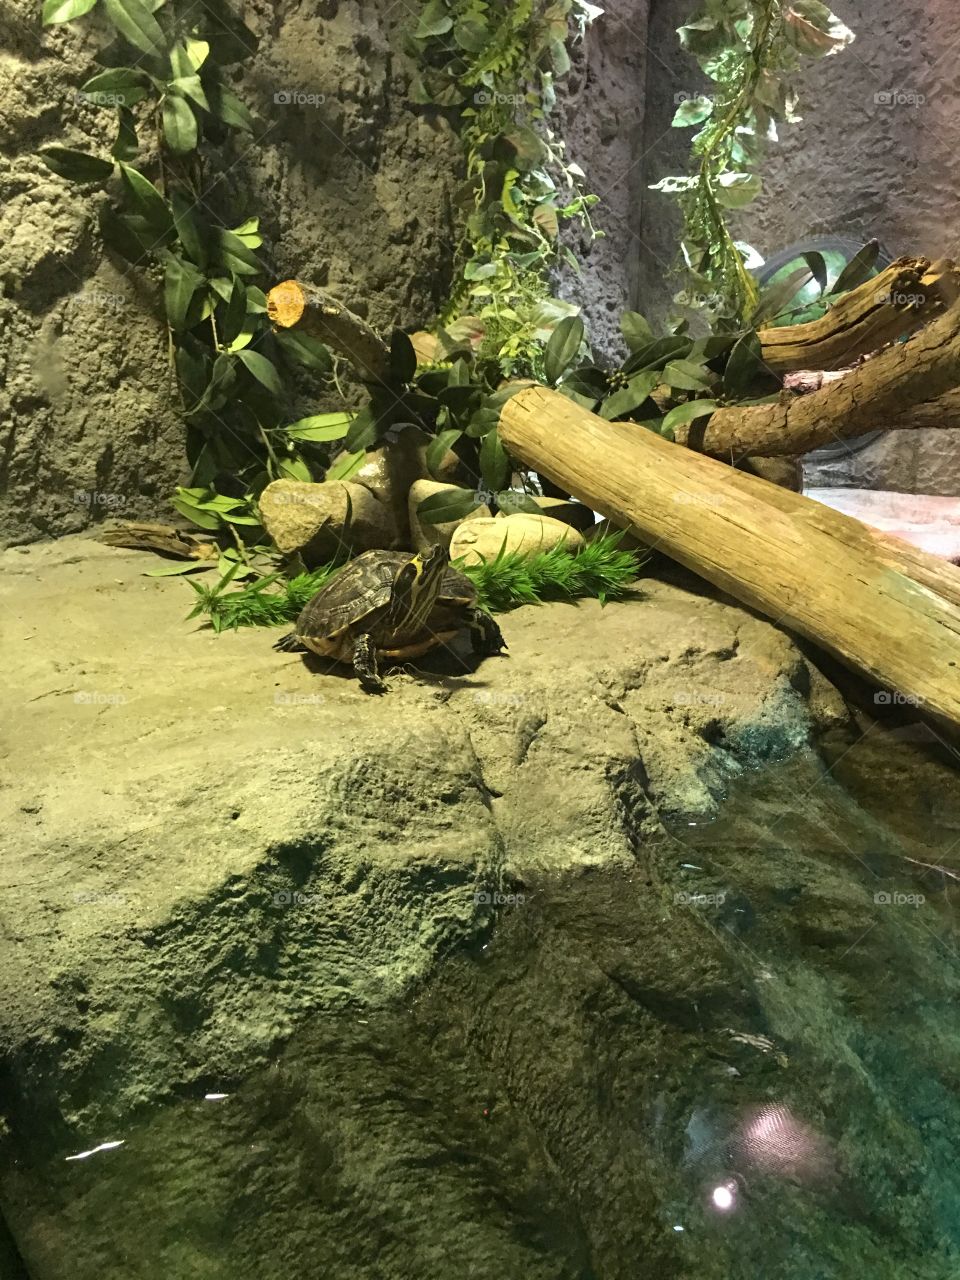 Turtle resting